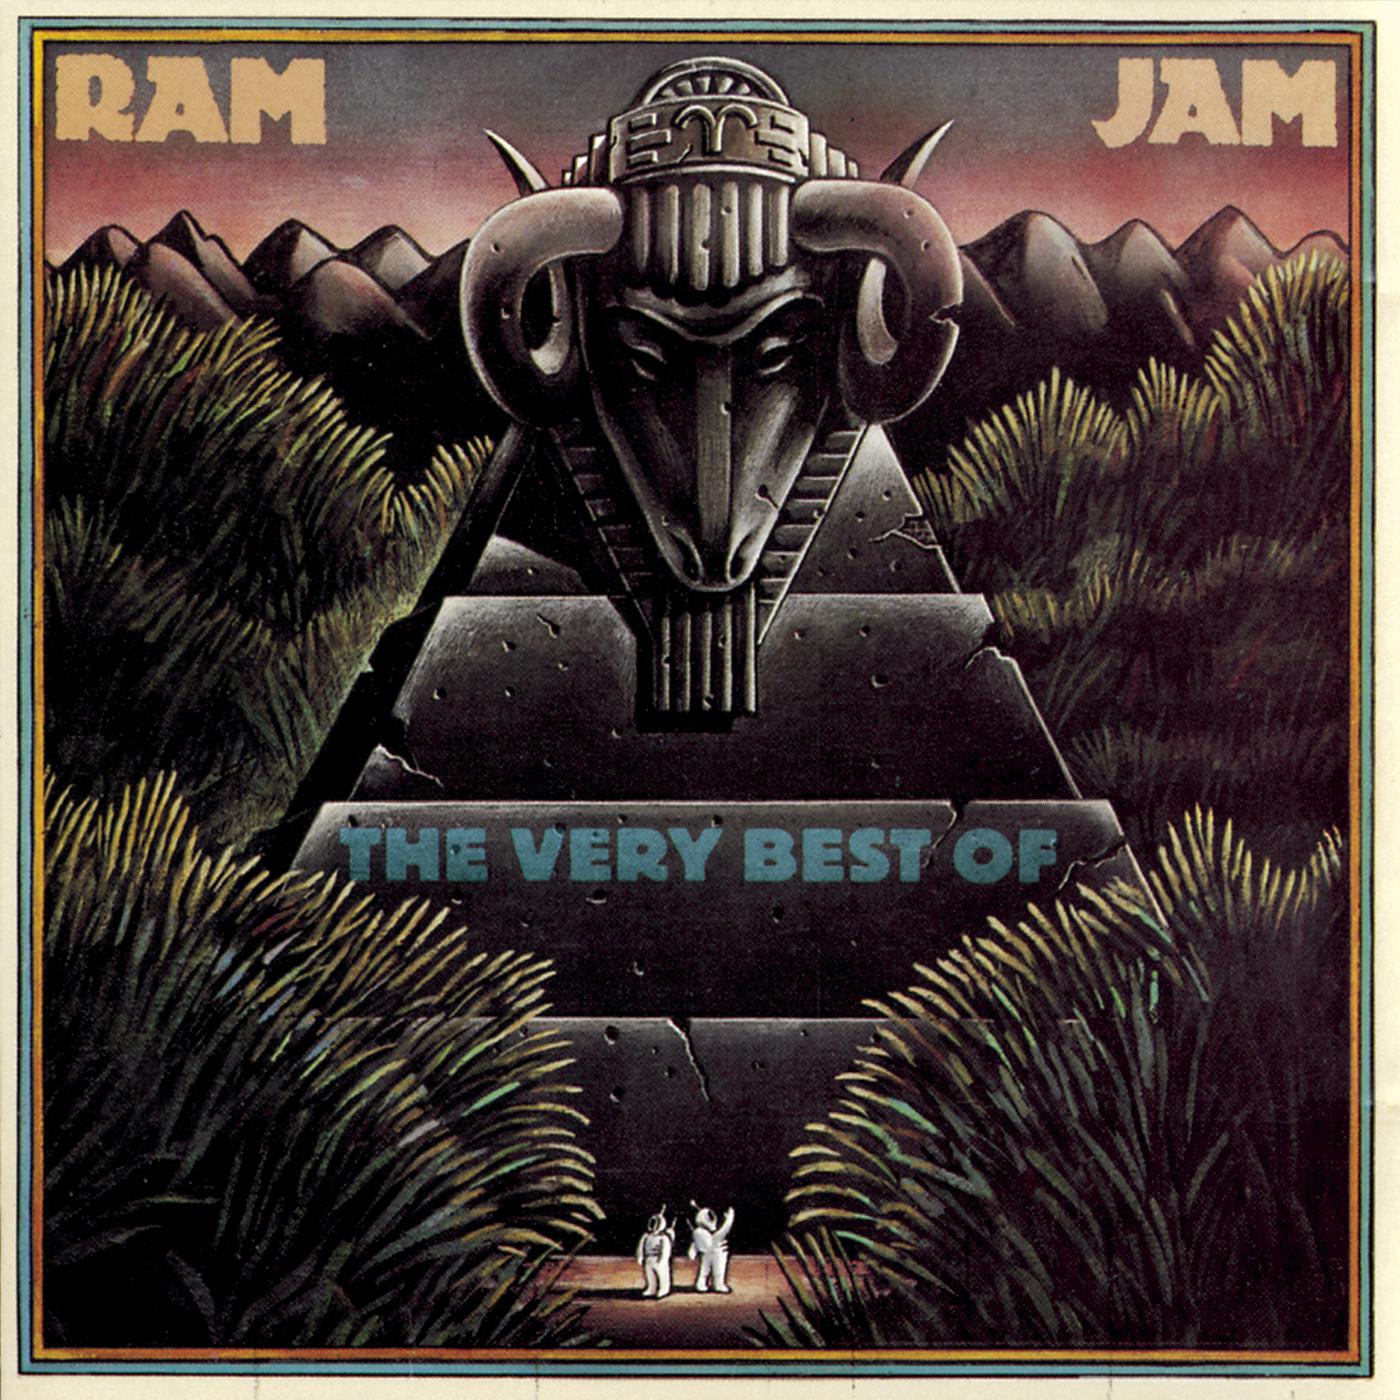 Ram Jam - Too Bad on Your Birthday